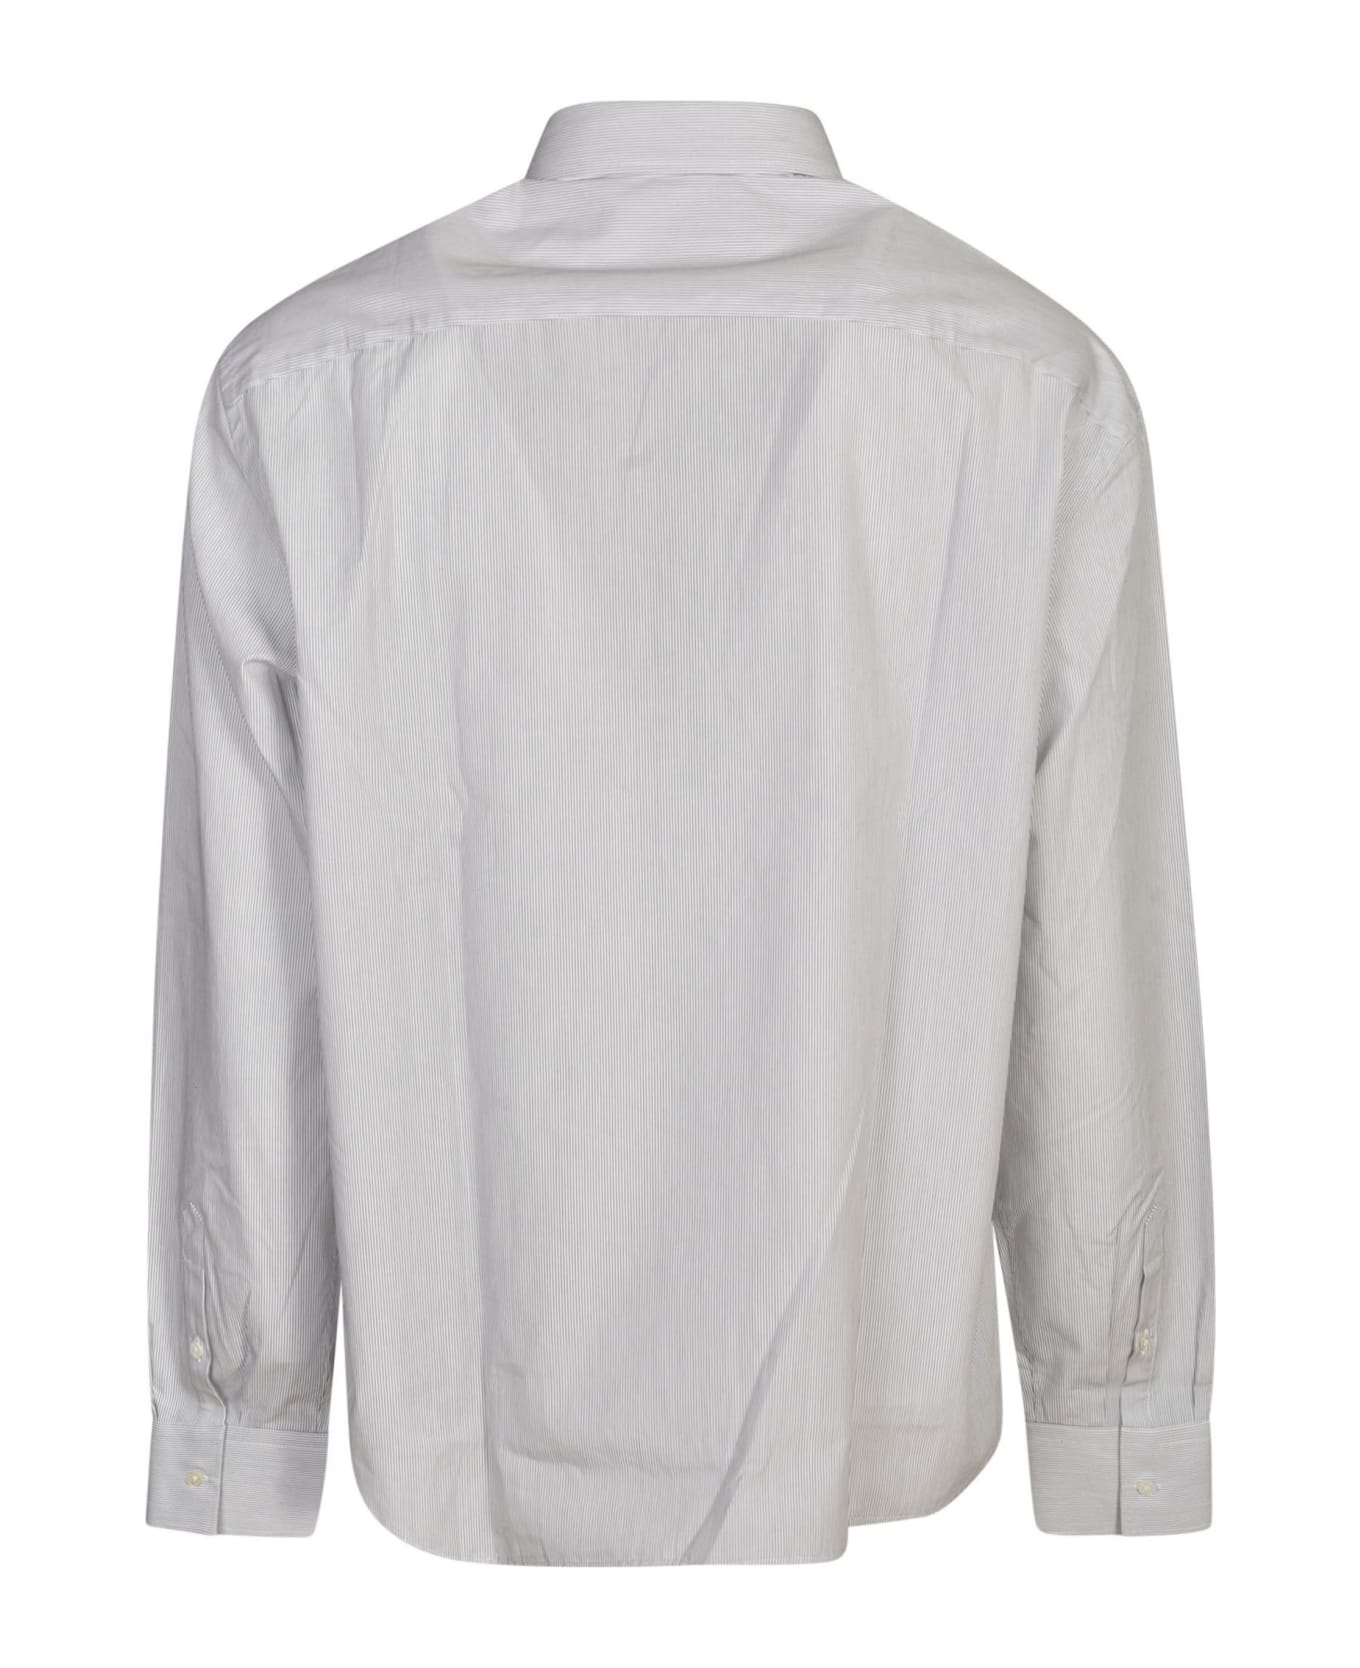 Lanvin Chemise Shirt - White/Black シャツ